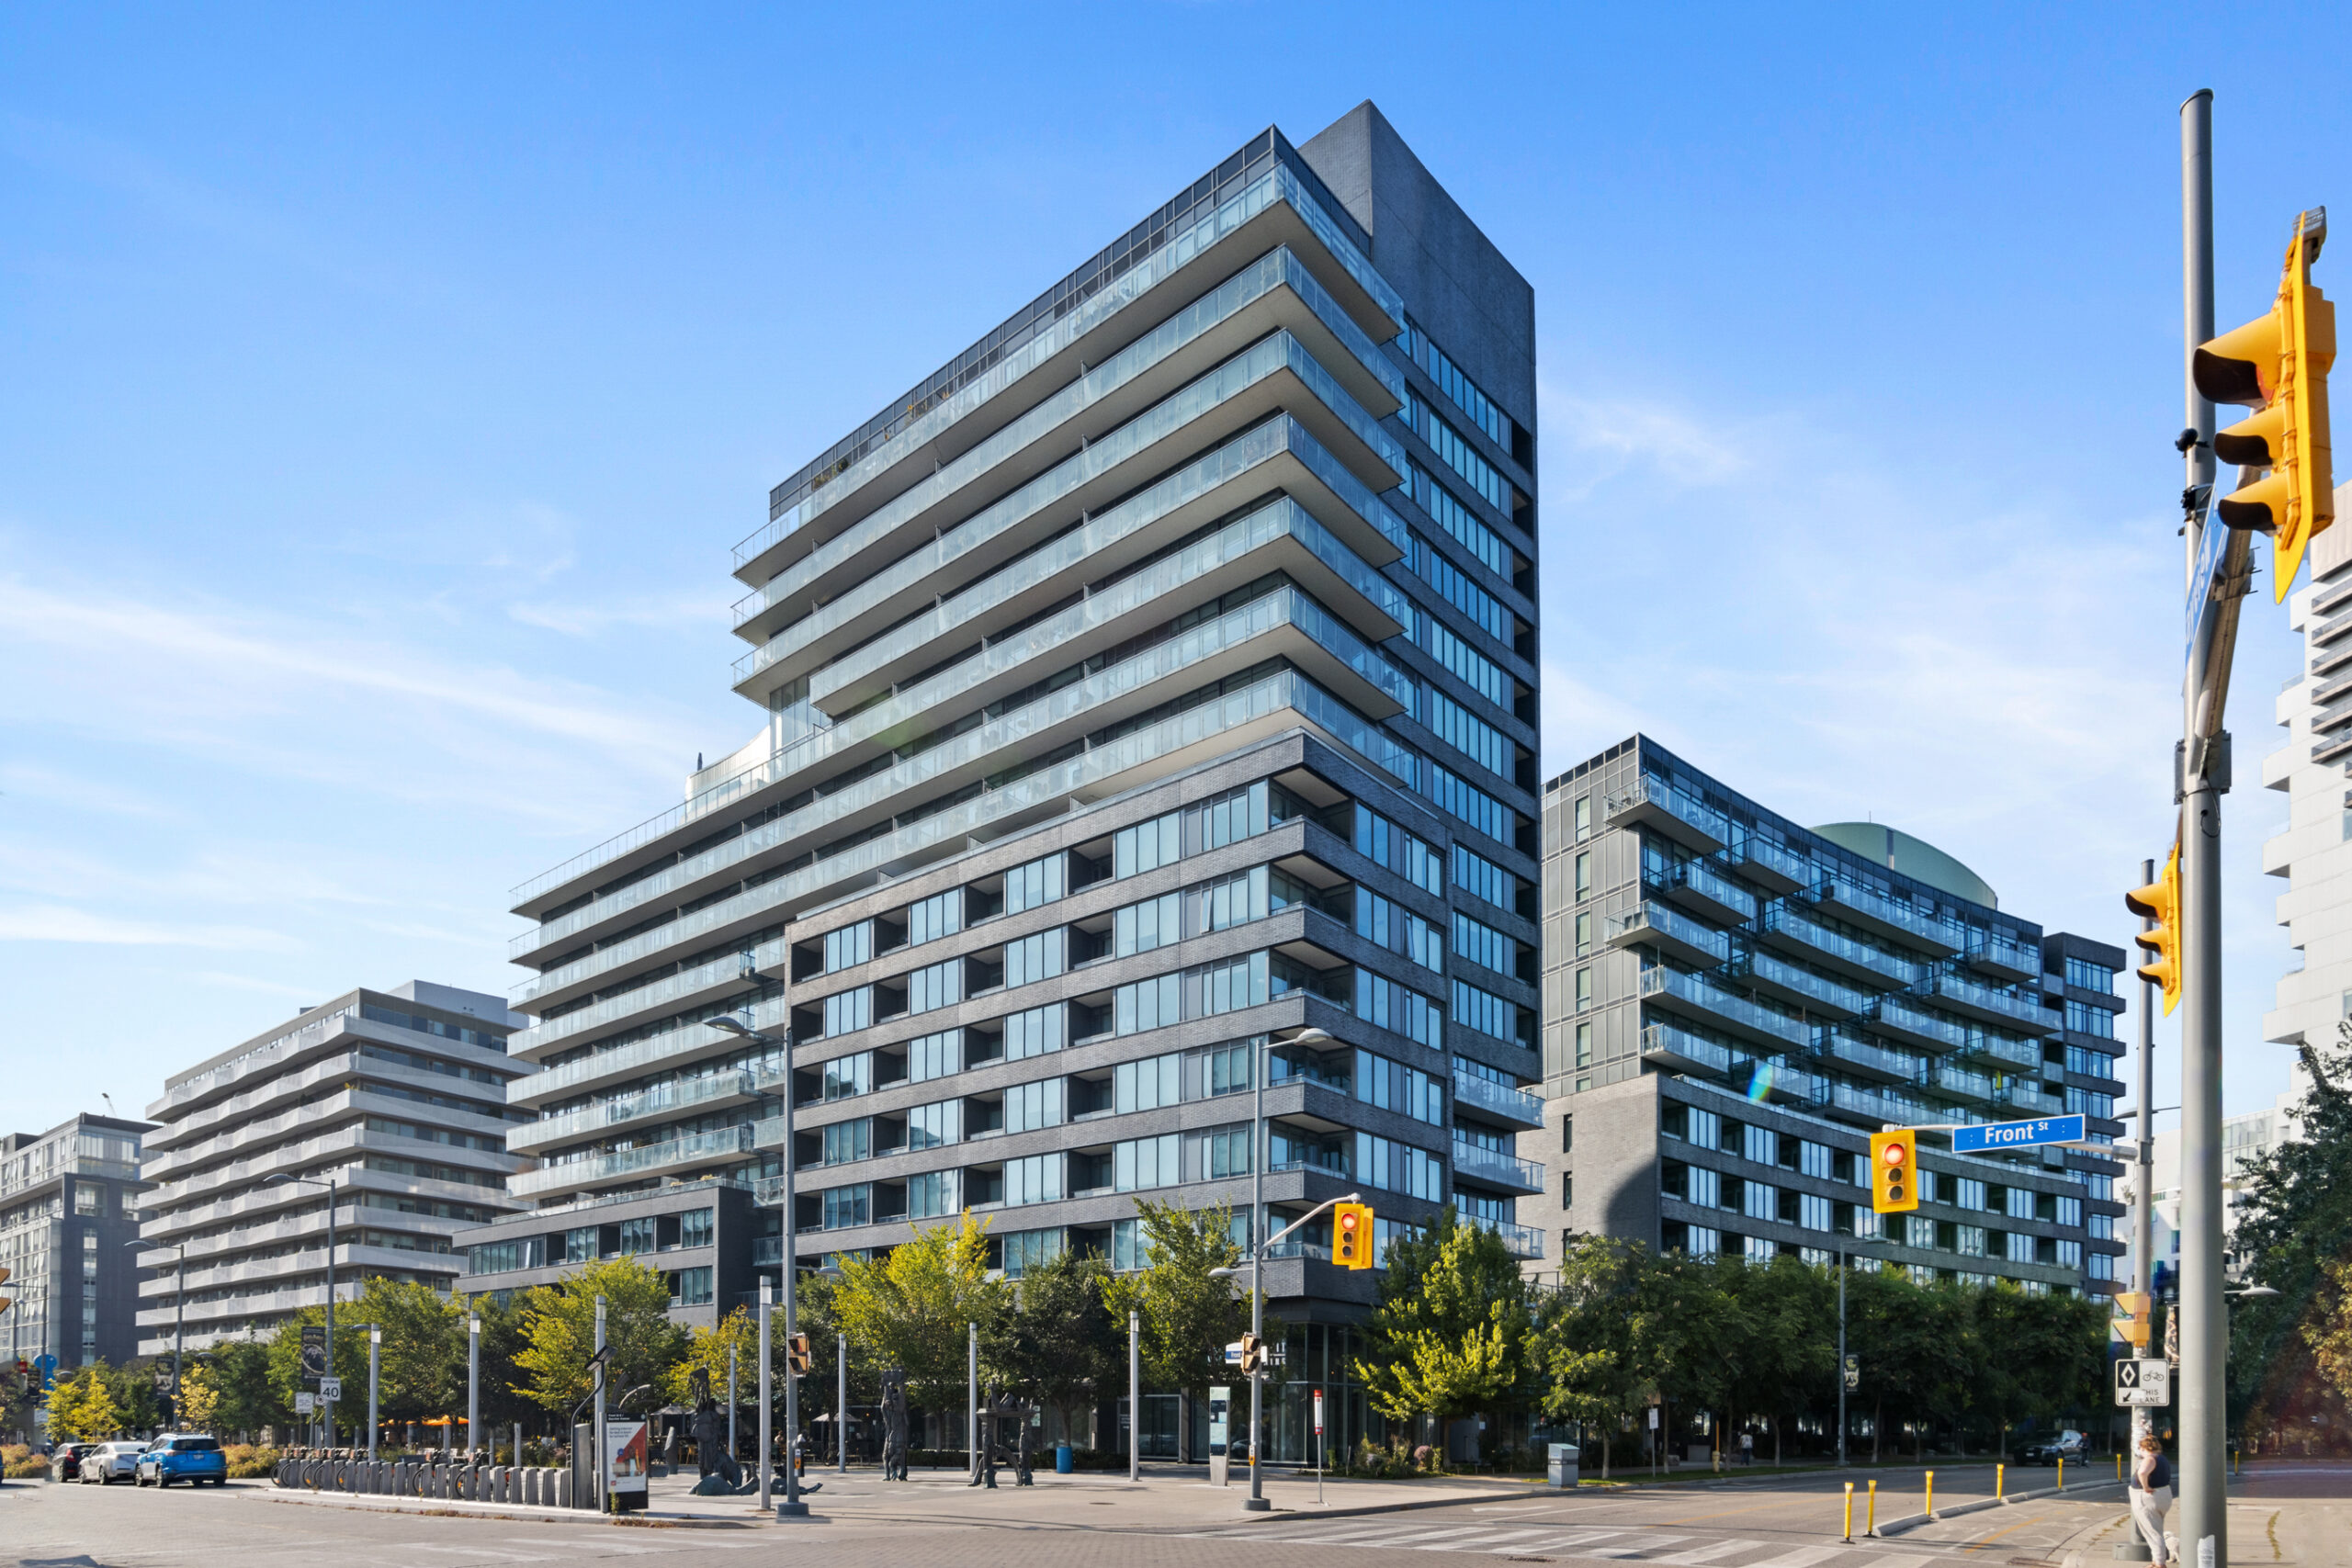 SOLD – 1 BDRM Condominium at 120 Bayview Ave in Toronto